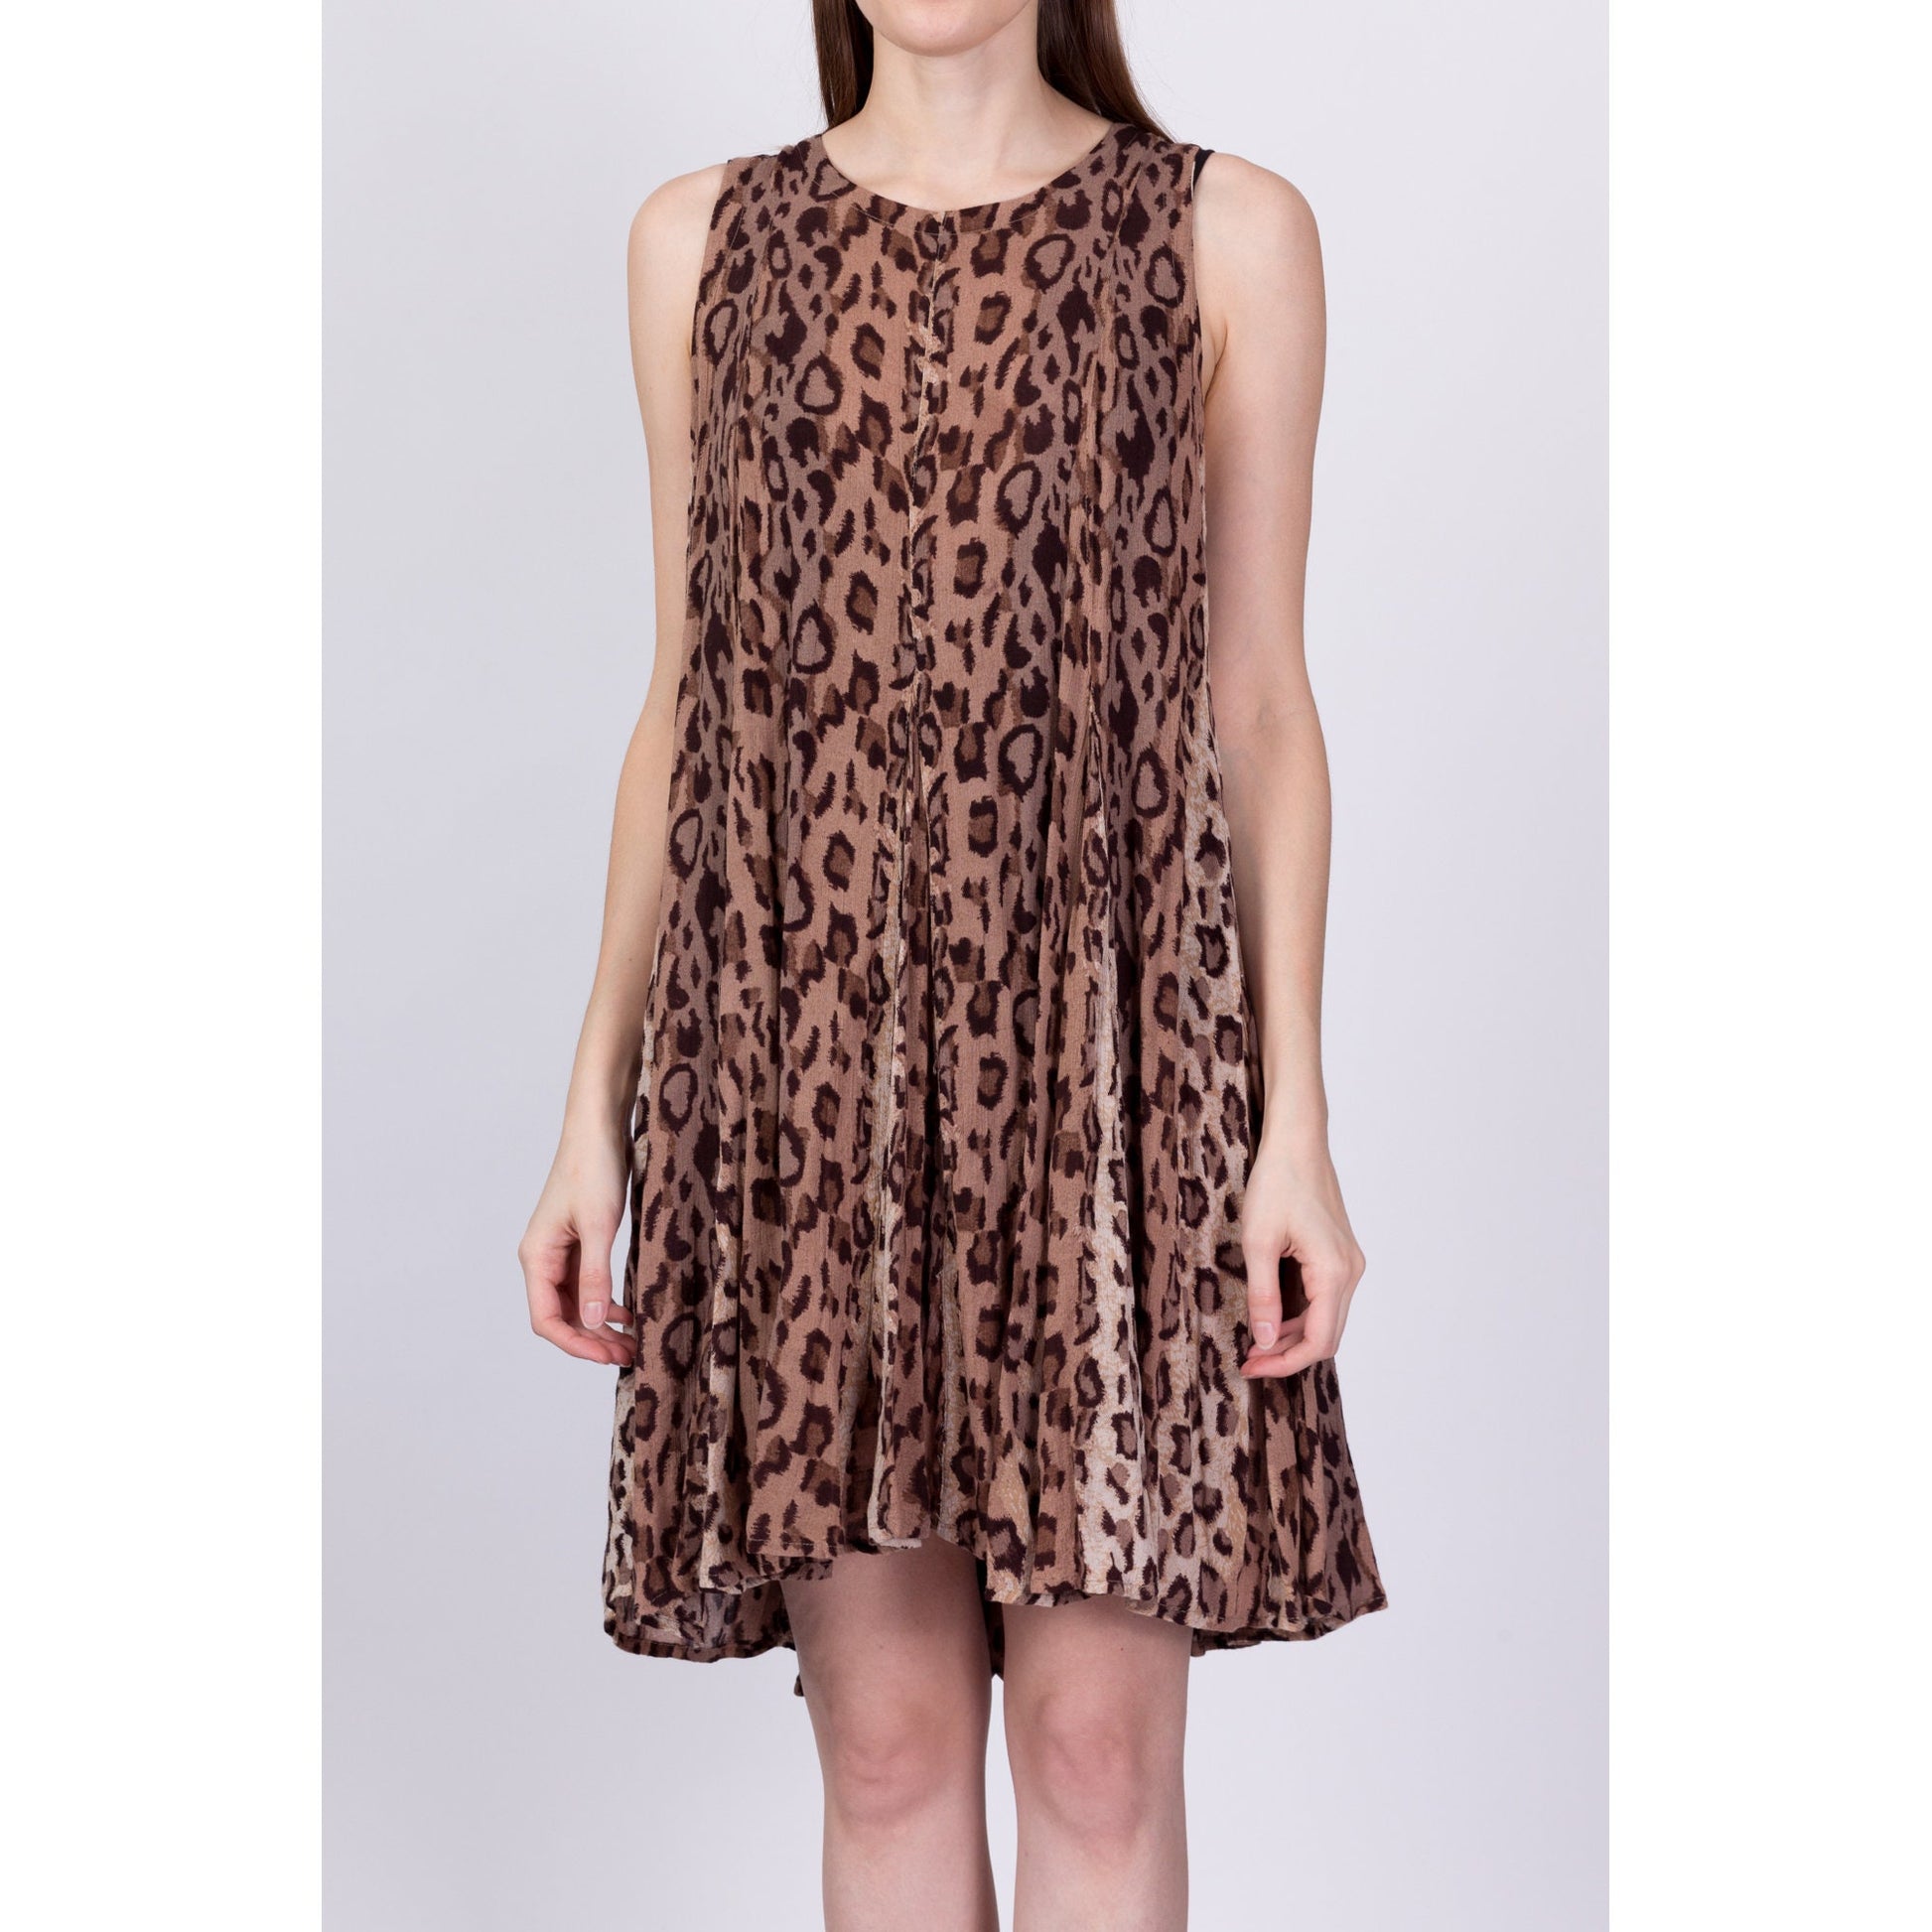 90s Grunge Leopard Print High-Low Mini Dress - One Size 